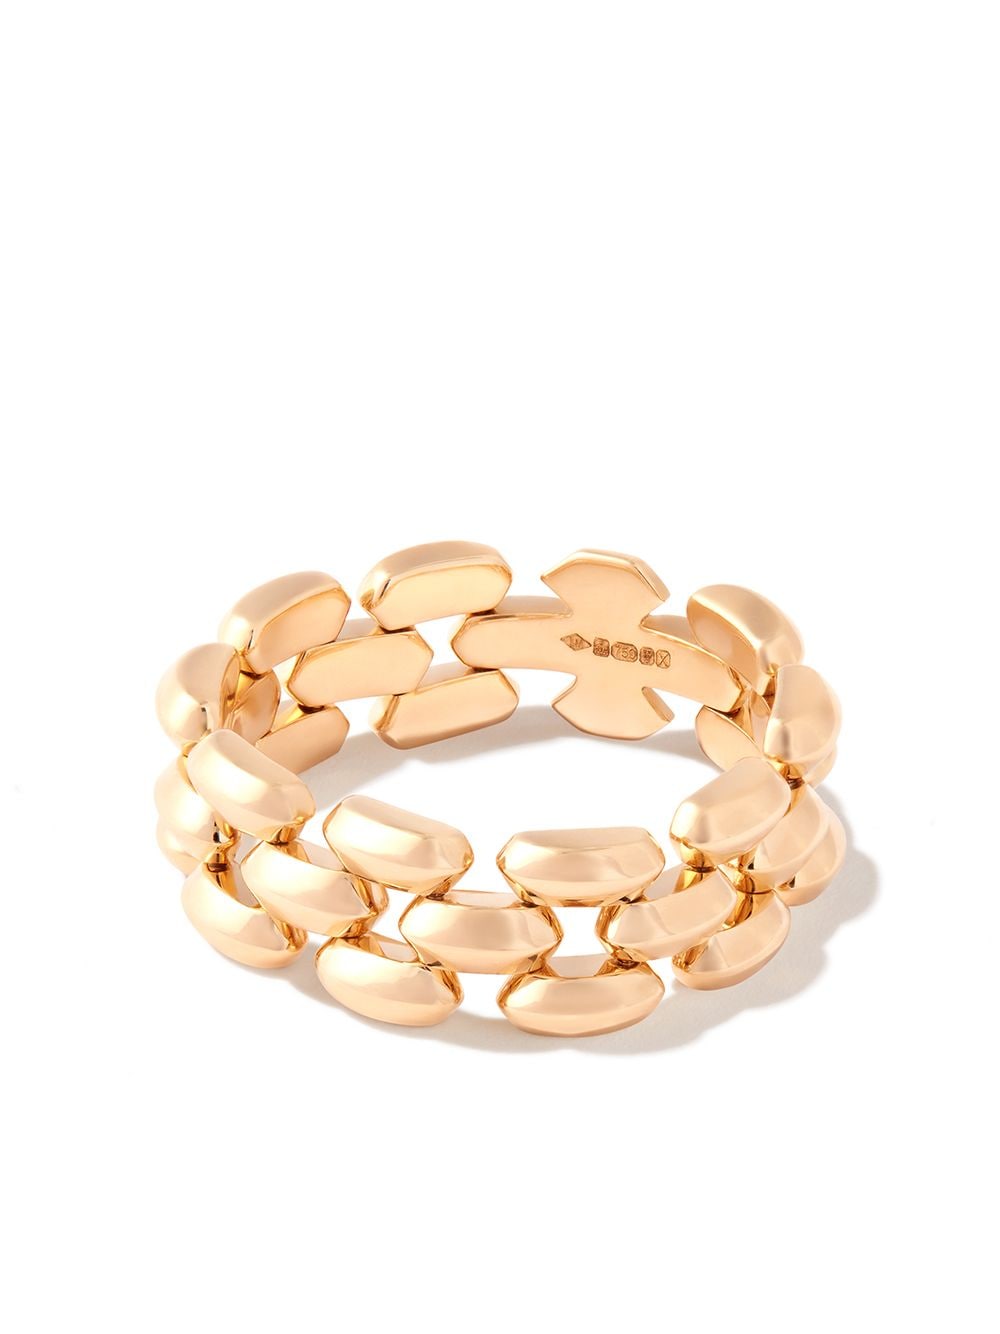 Lizzie Mandler Fine Jewelry 18kt yellow gold Cleo ring von Lizzie Mandler Fine Jewelry